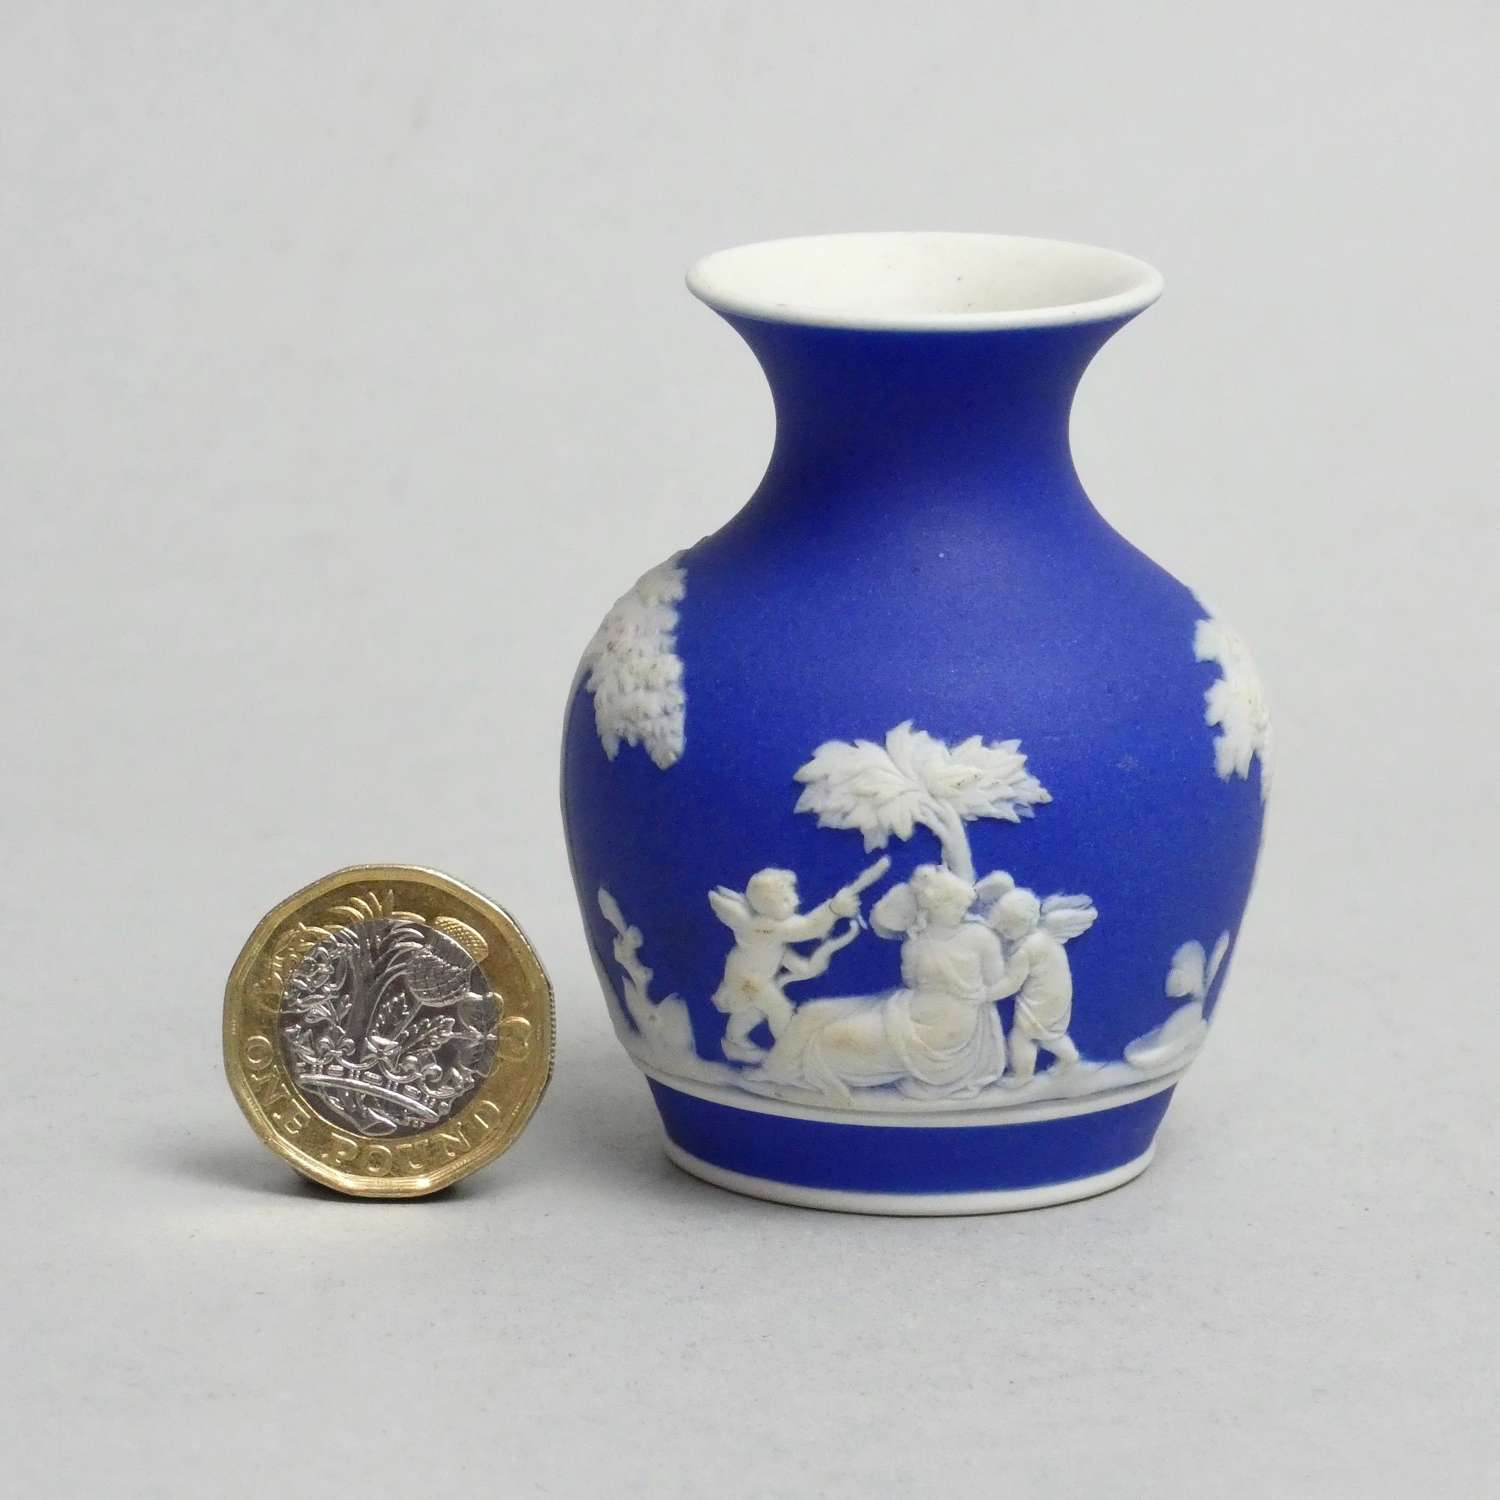 Miniature Wedgwood vase